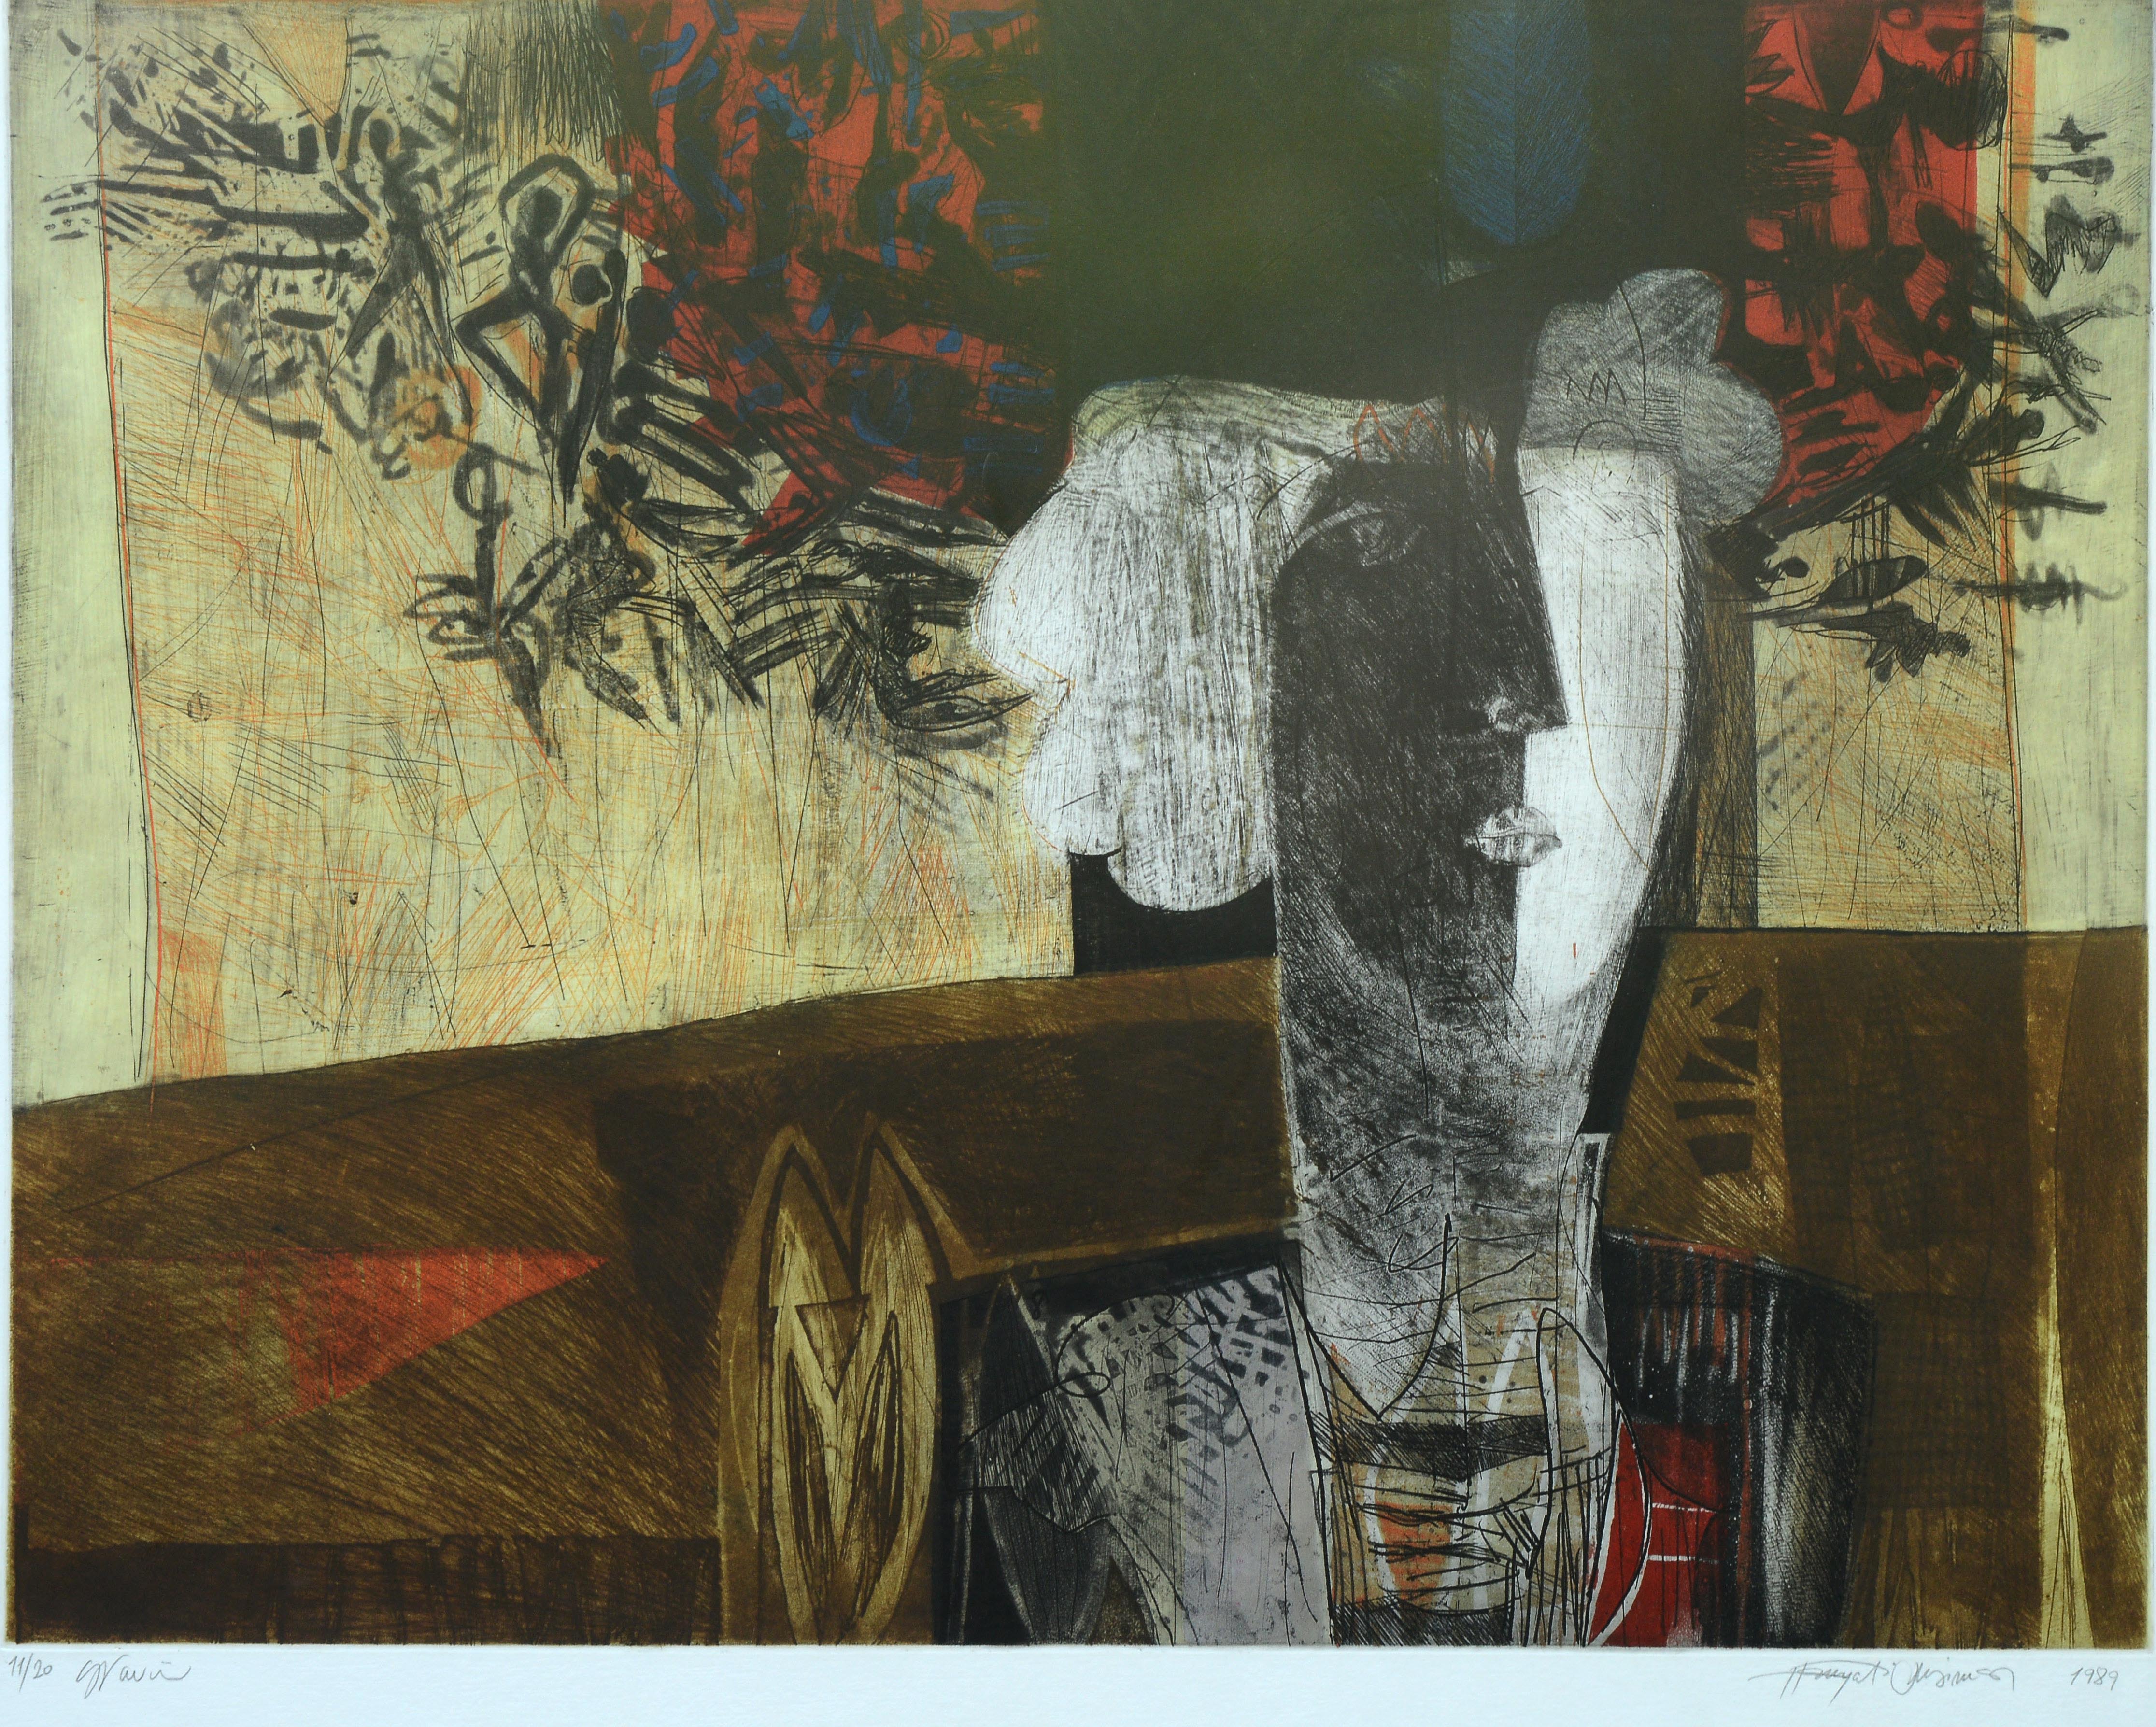  İsimsiz- Untitled, 1989, Gravür-Engraving, 70x100 cm